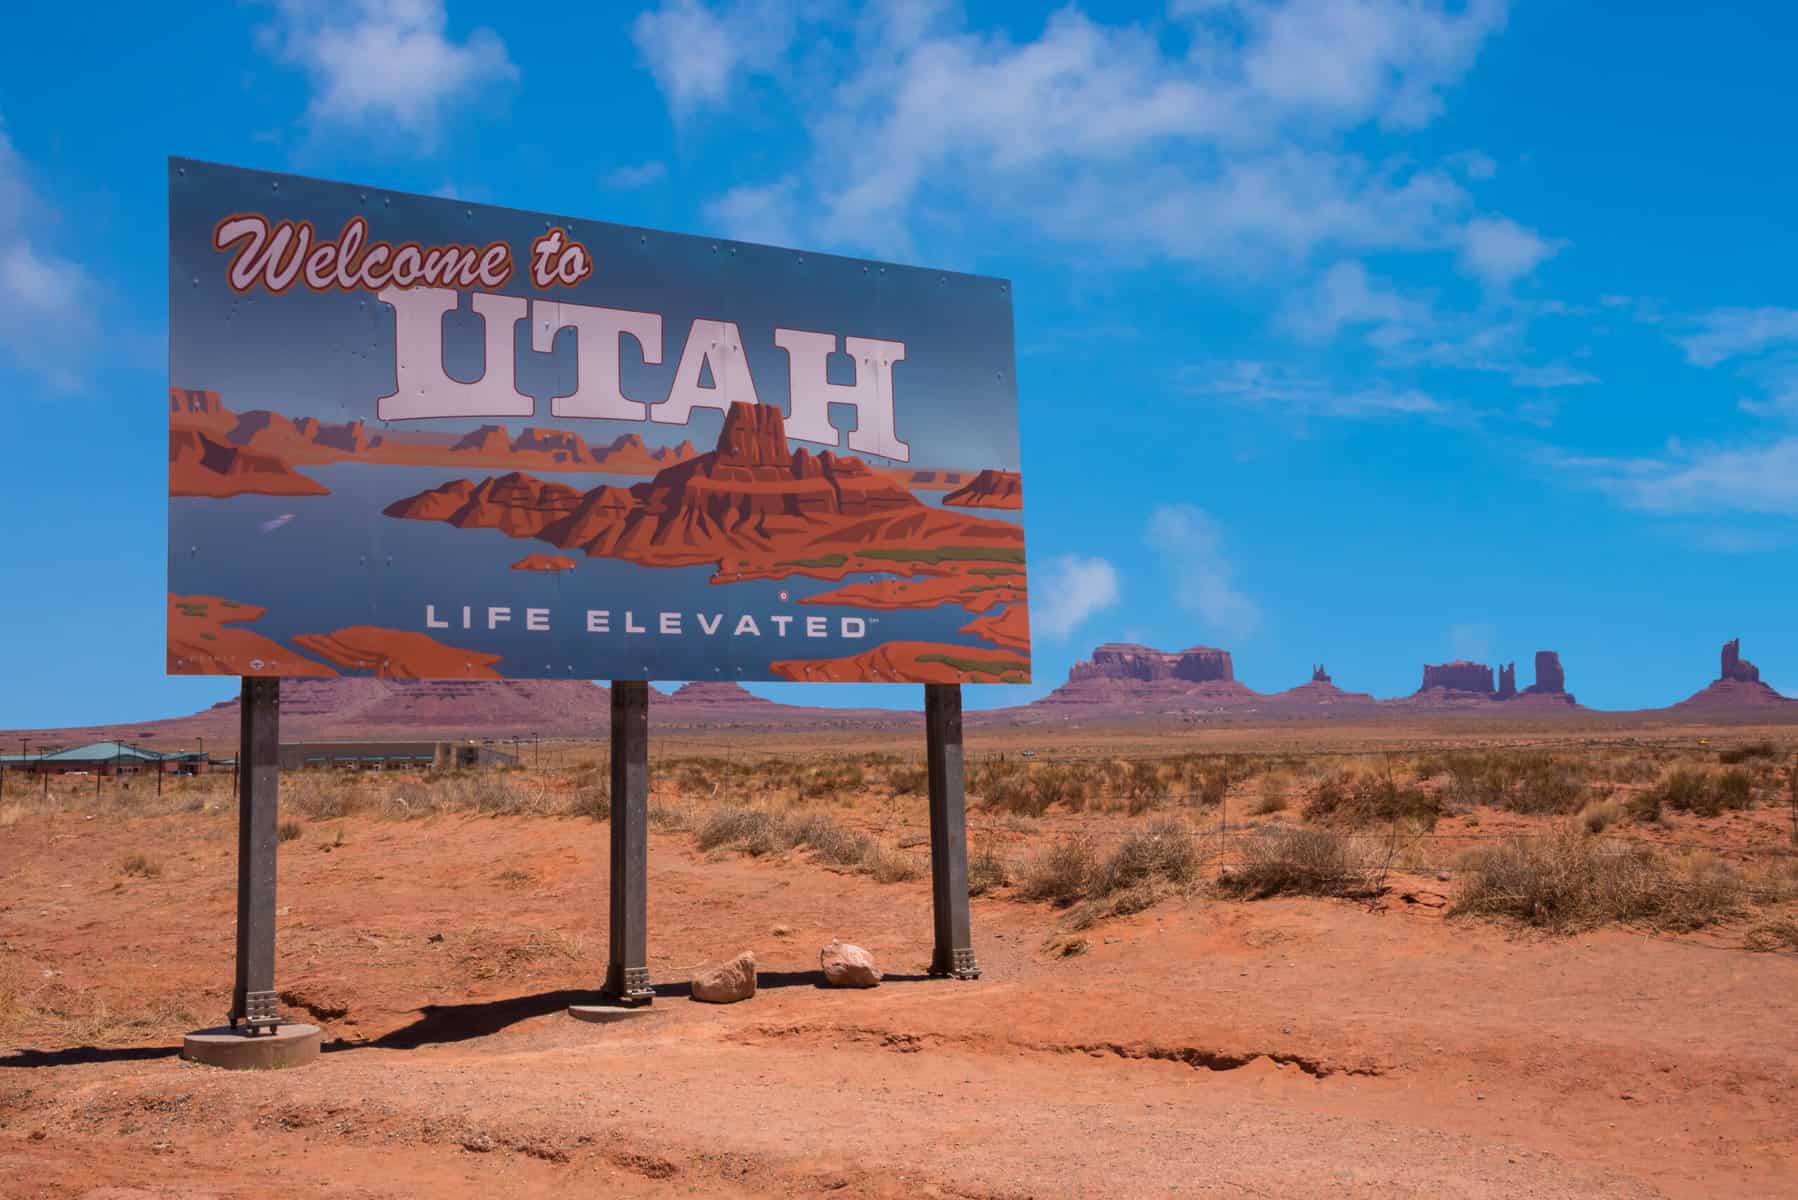 Travel to these luxury RV resorts in Utah